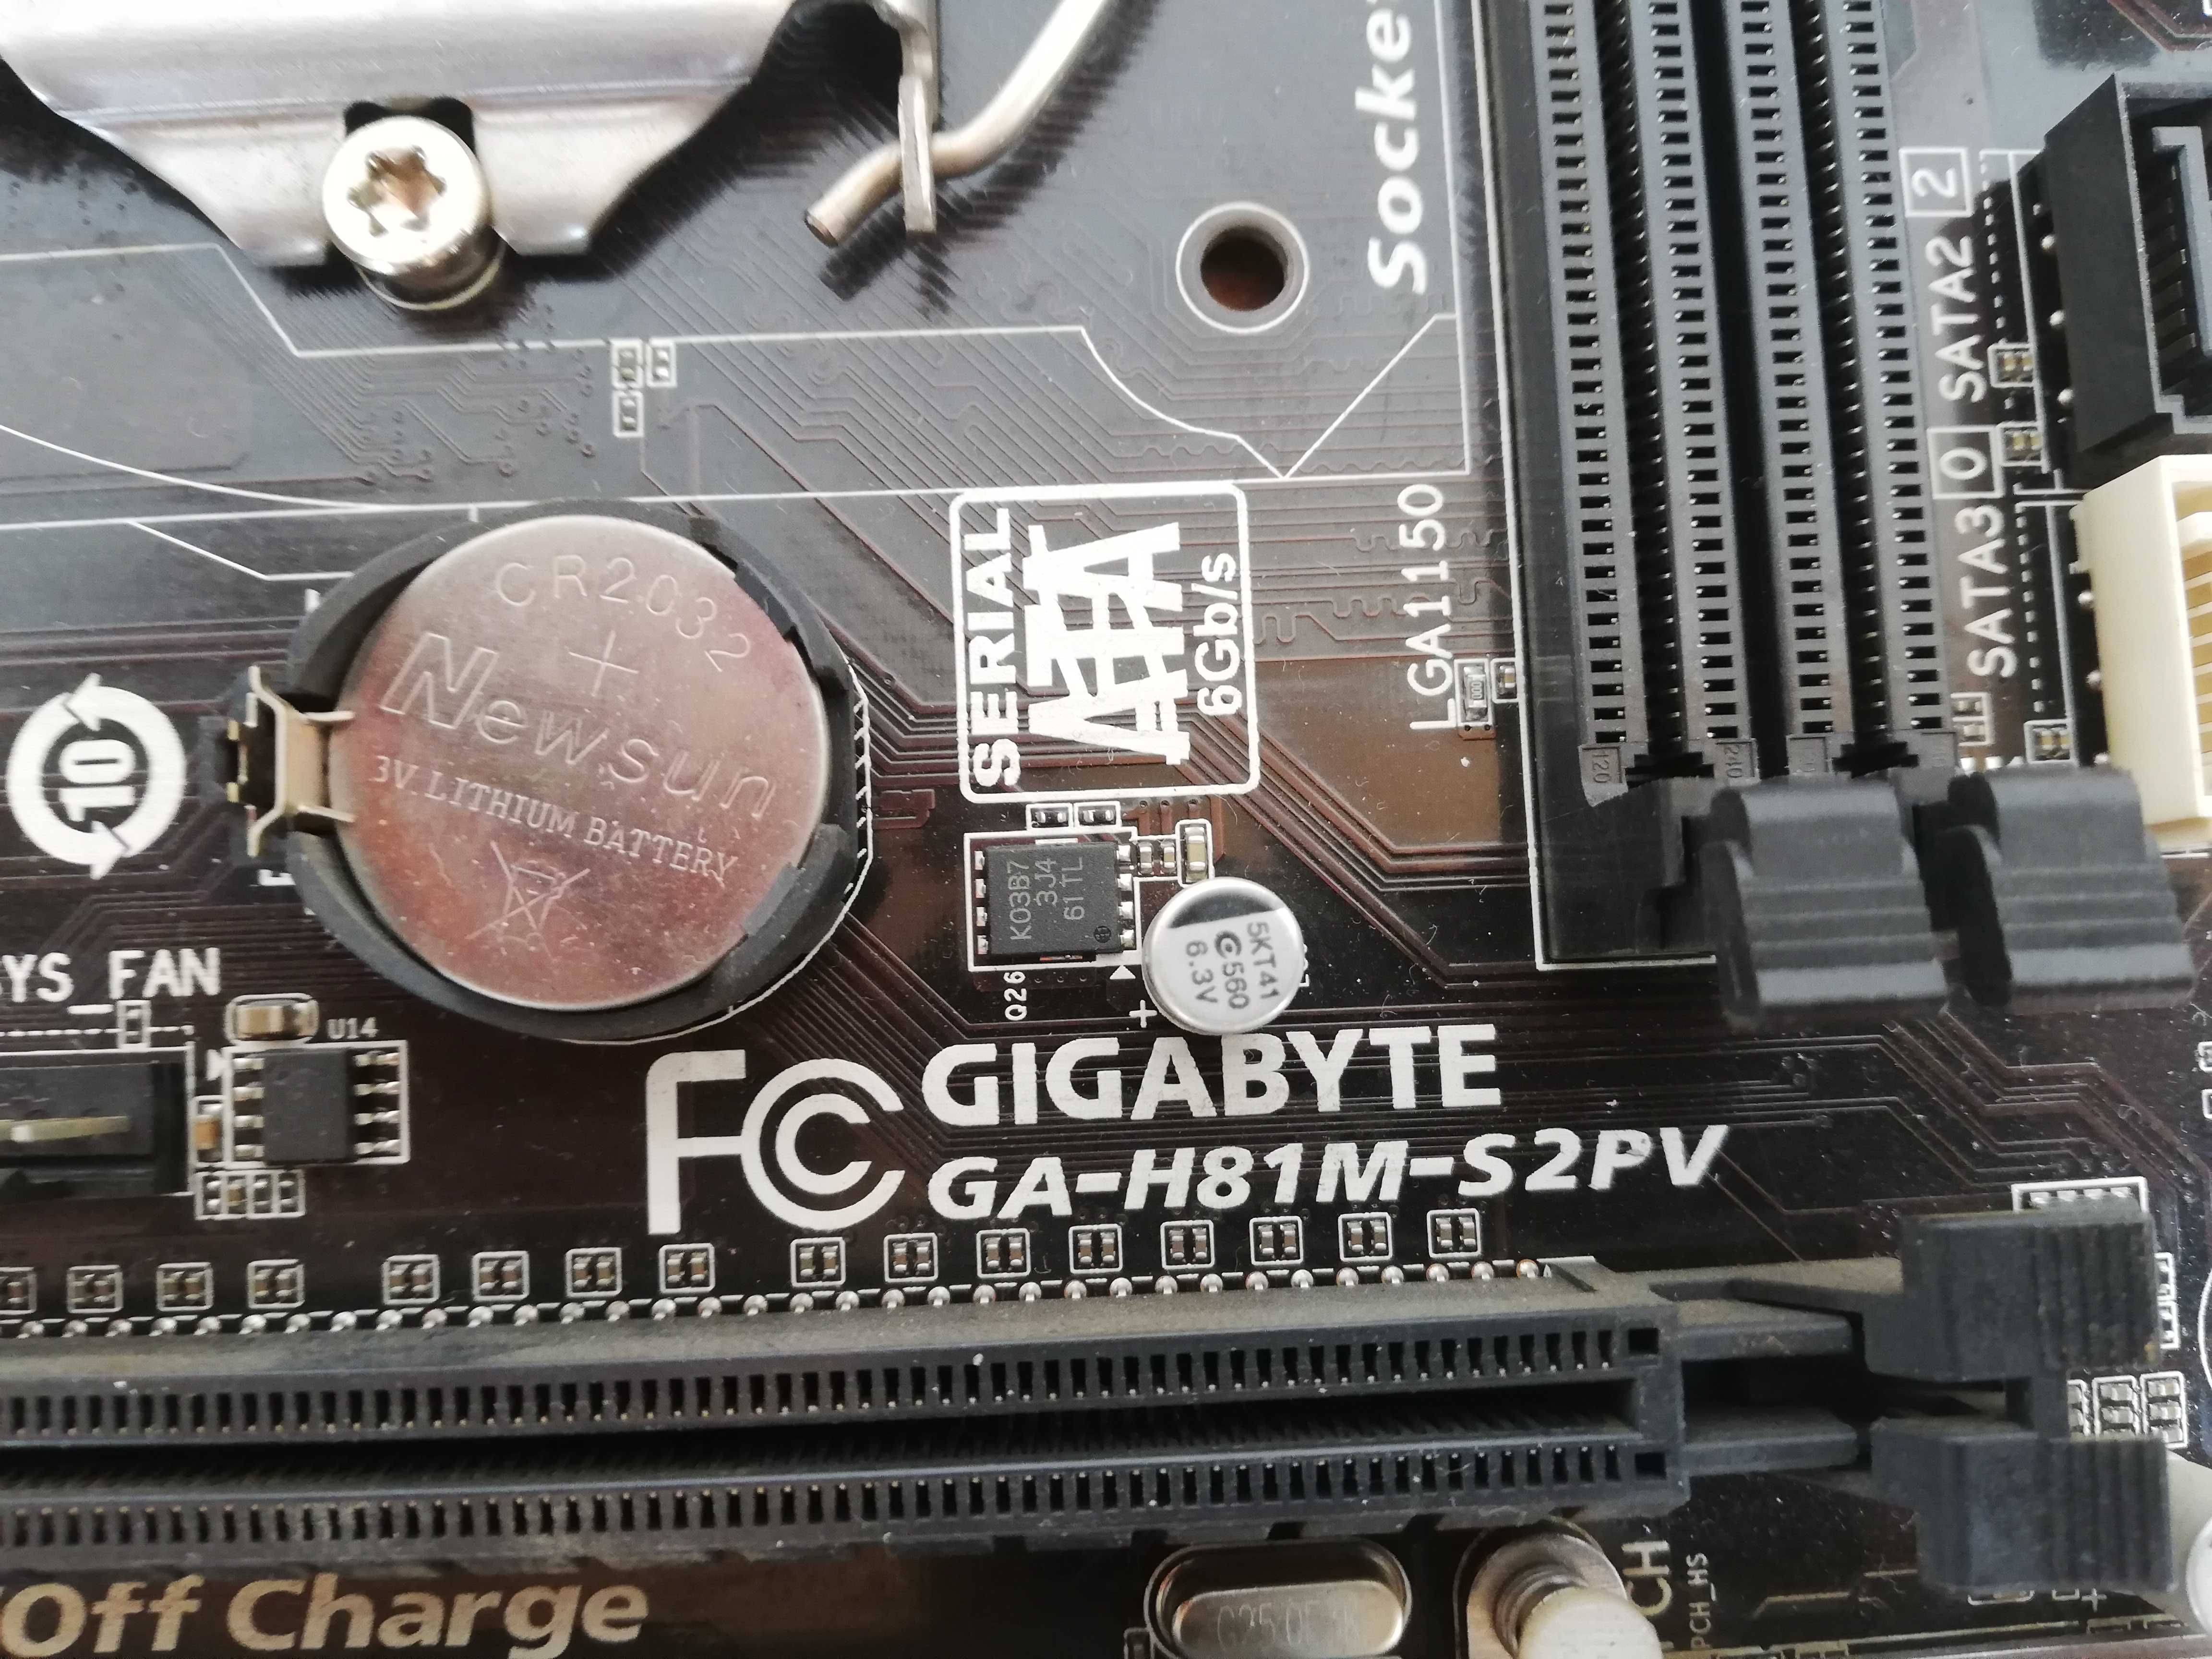 Gigabyte GA-H81M-S2PV + Celeron G1820 + 4GB RAM